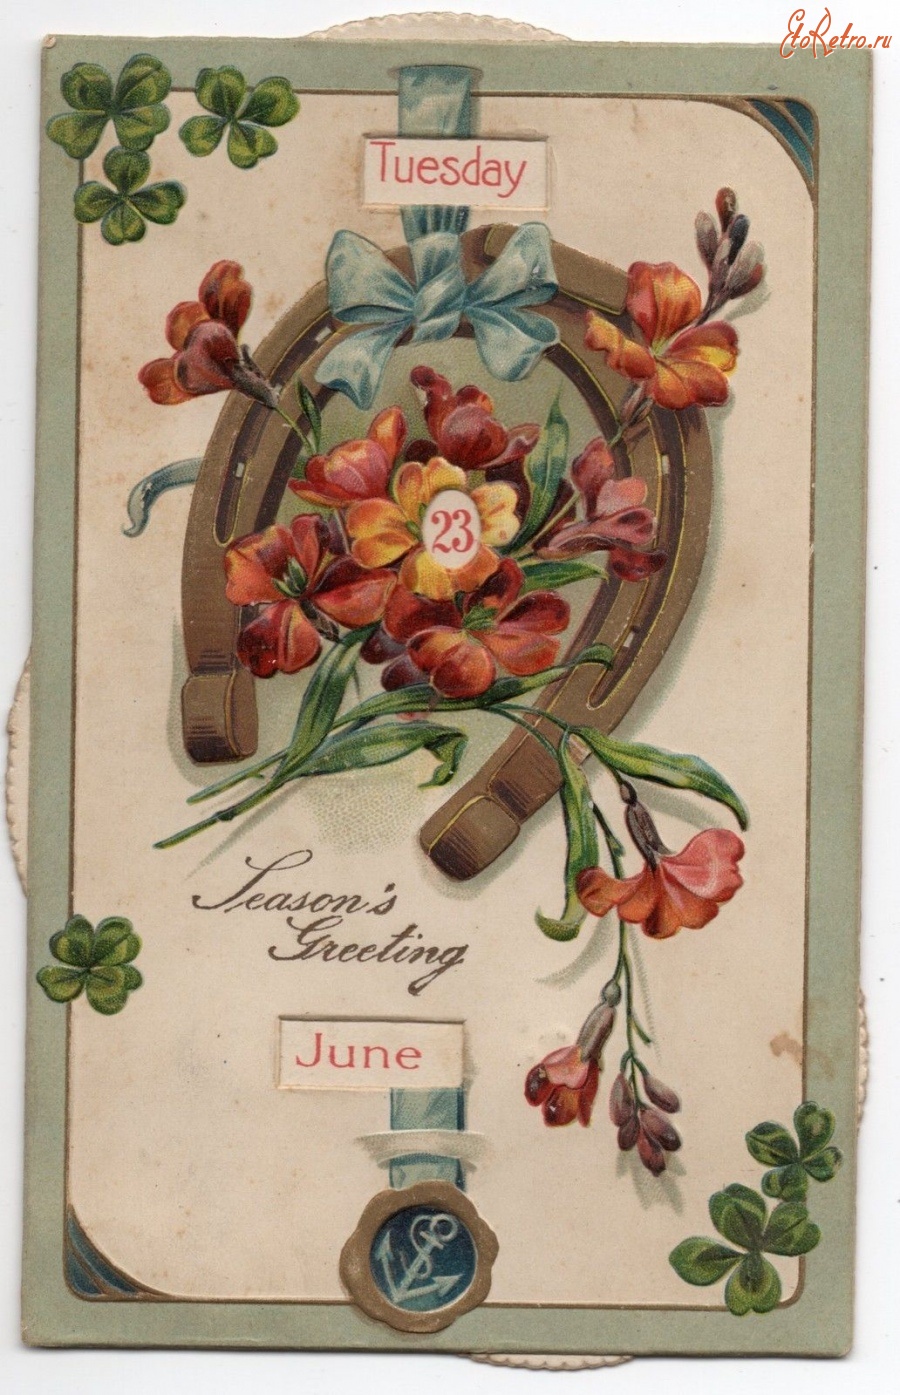 Ретро открытки - Приветствие с календарём месяца